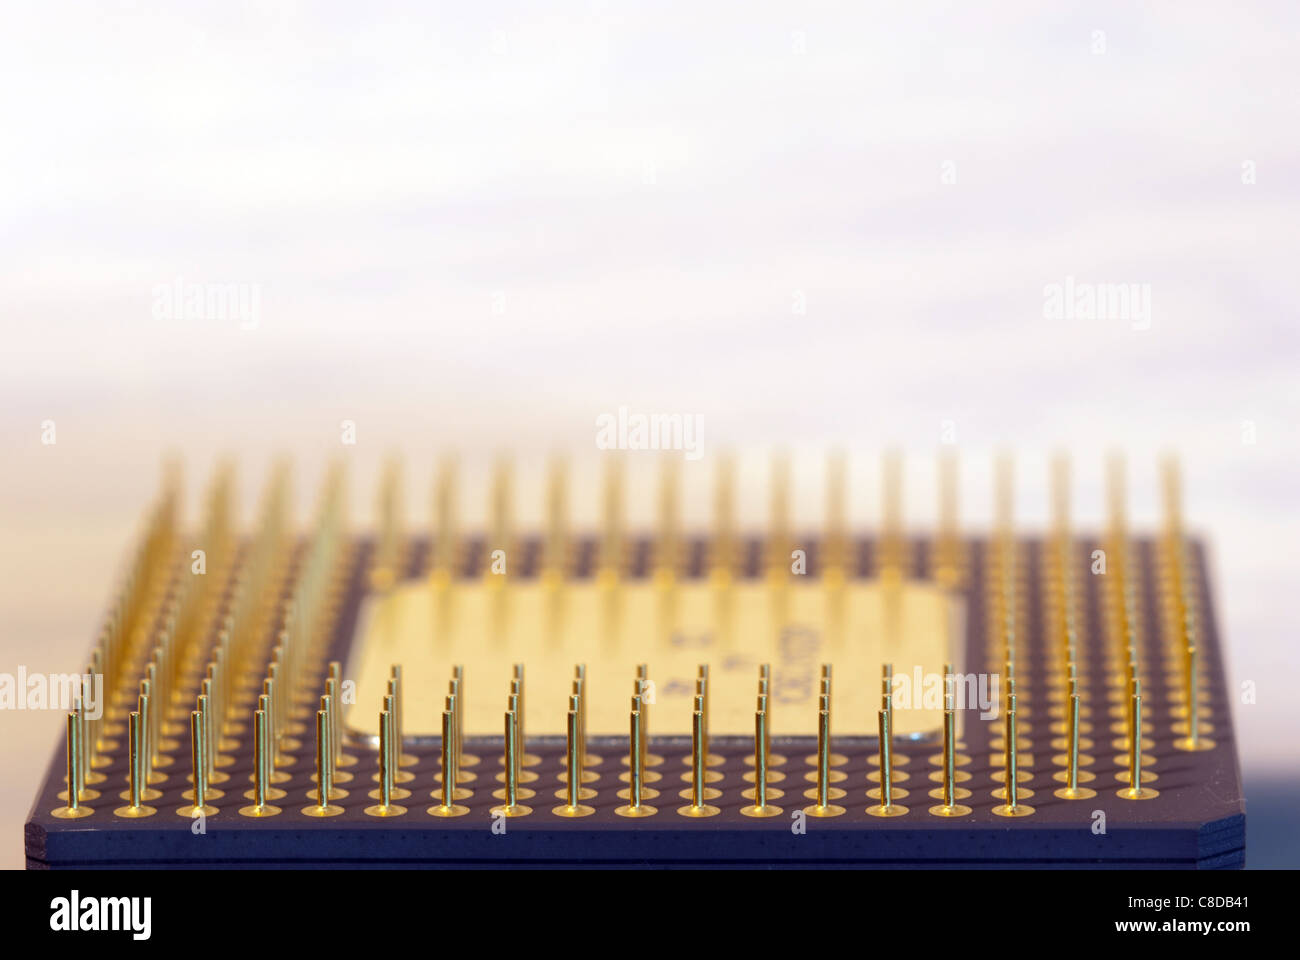 Intel Pentium overdrive microprocessor close up Stock Photo